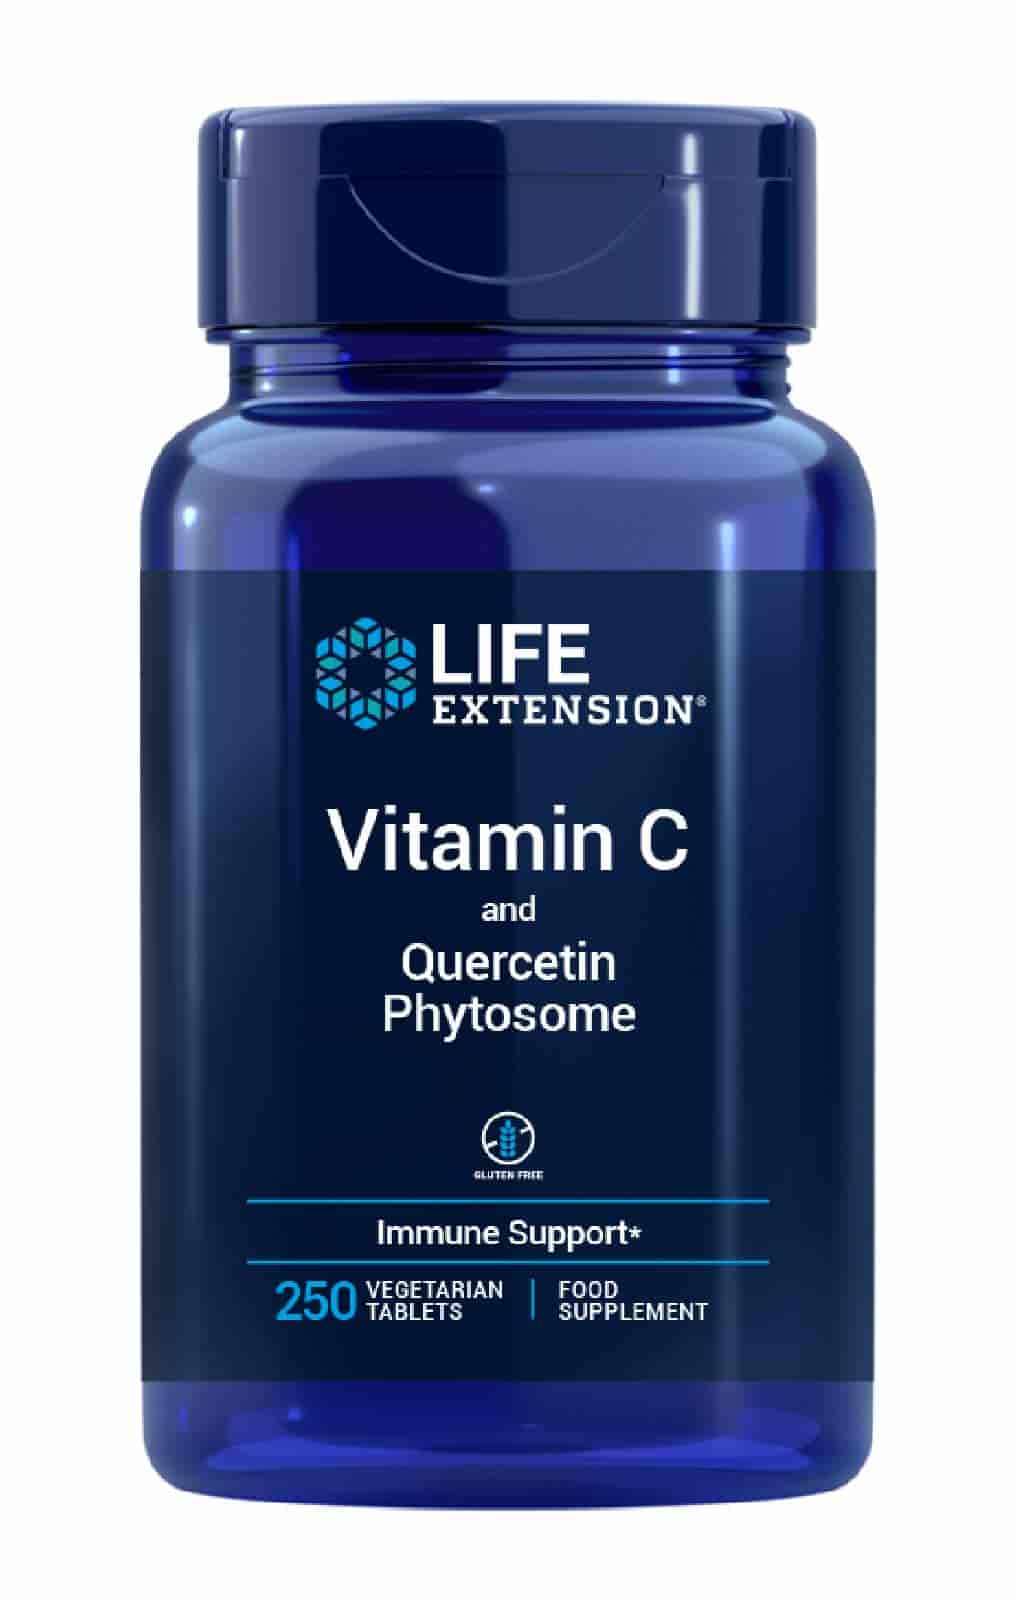 Vitamine C and Quercetin Phytosome